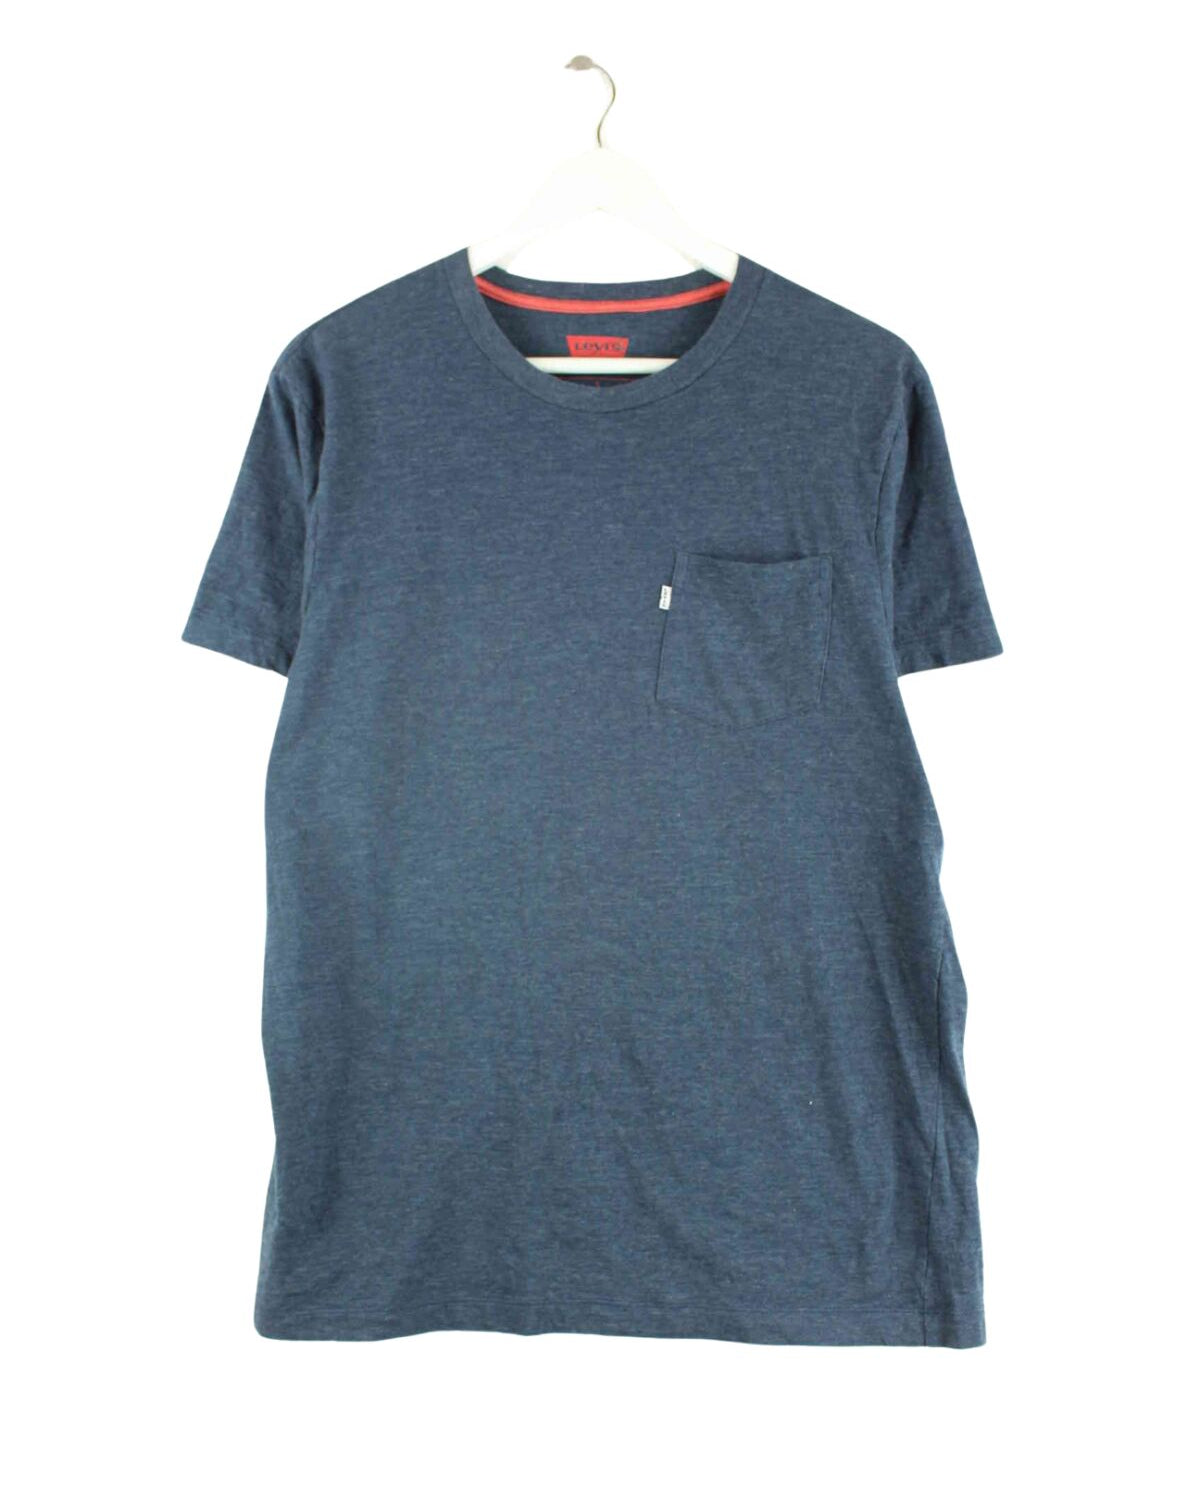 Levi's Basic T-Shirt Blau L (front image)